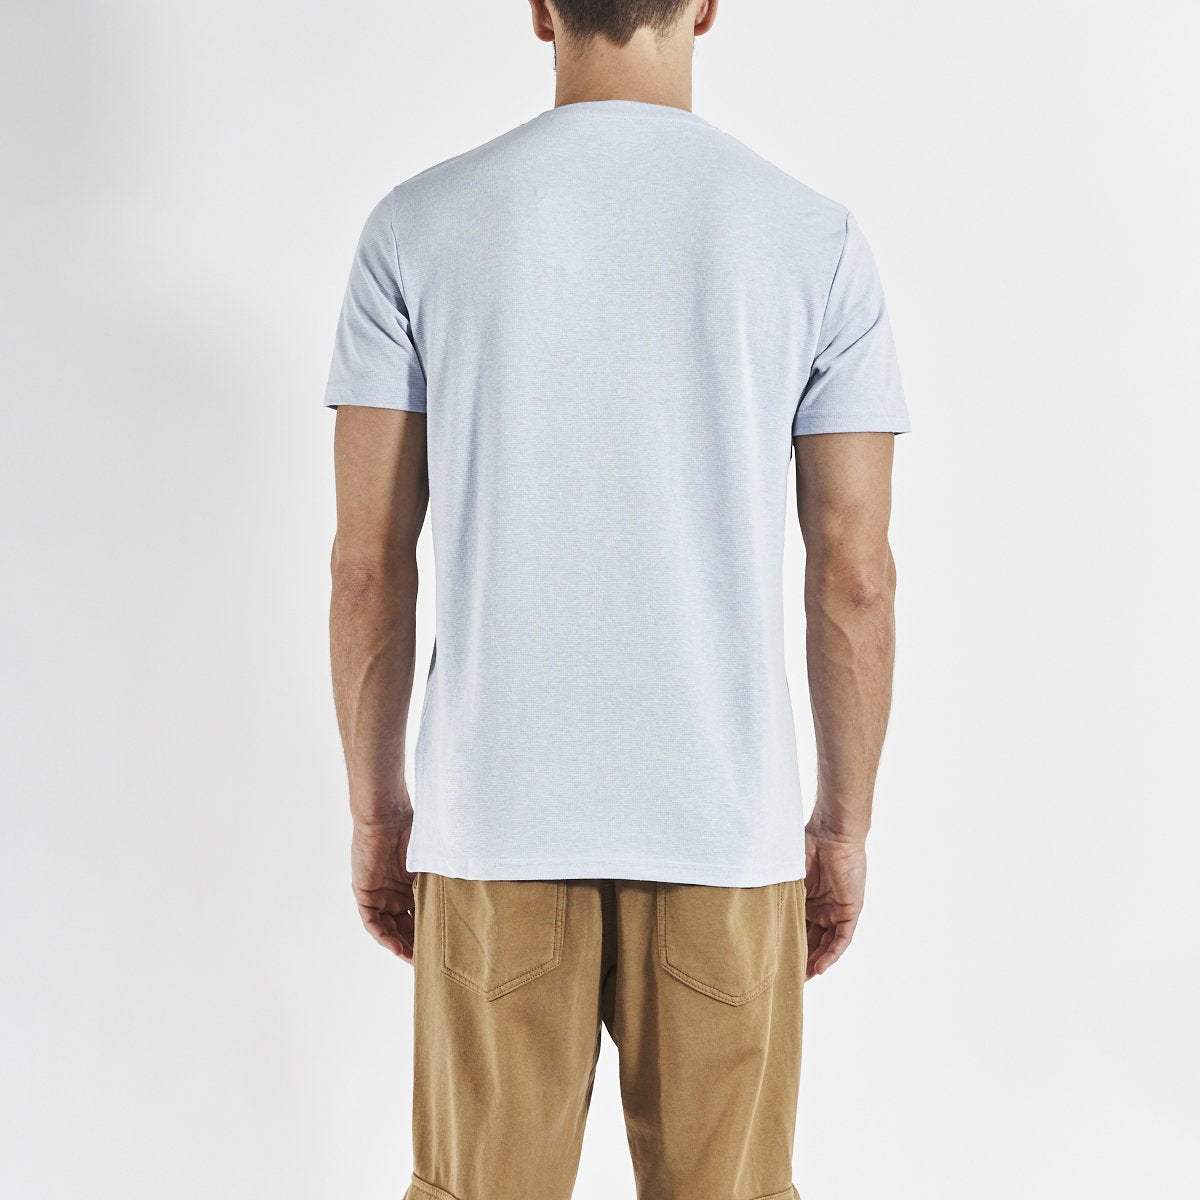 Camiseta Ibisso hombre azul - Imagen 3